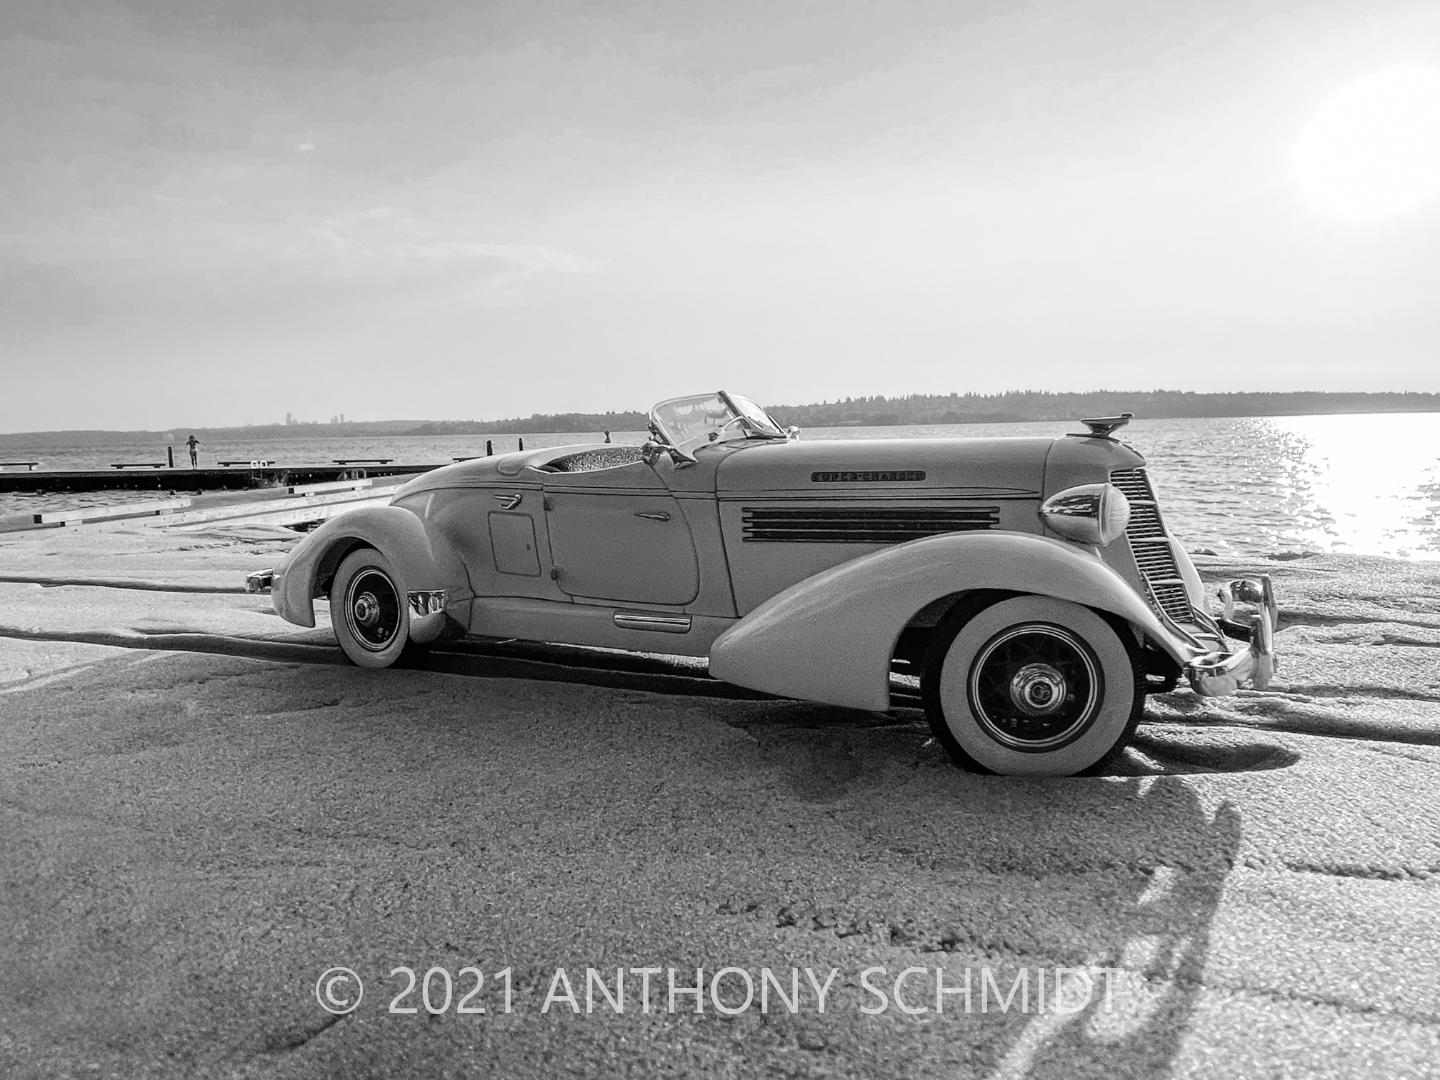 1935 Auburn 851 B&W